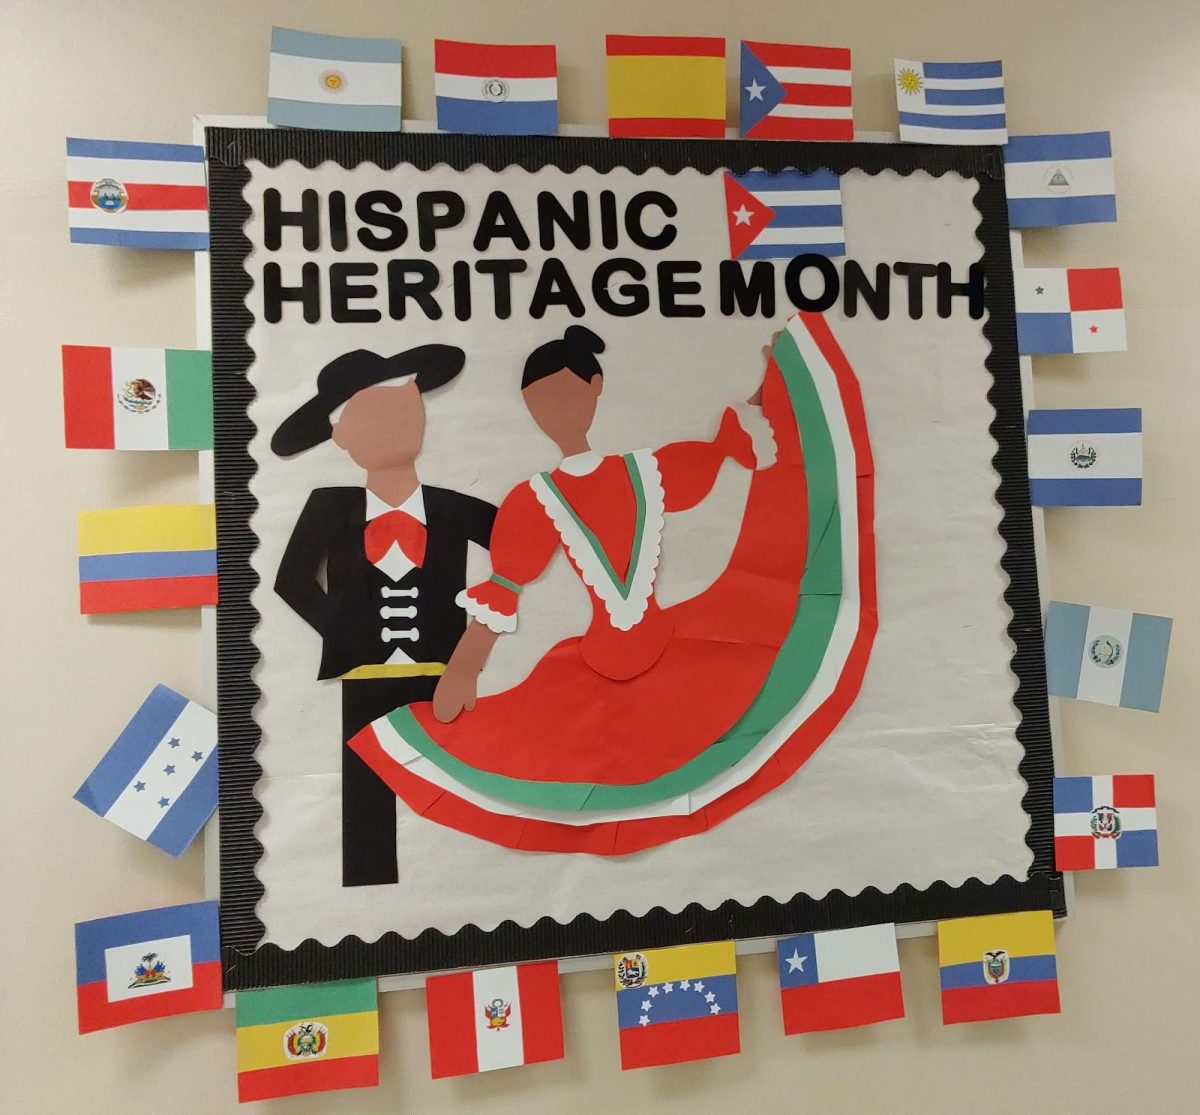 Celebrating Hispanic Heritage Month at BC ECHS